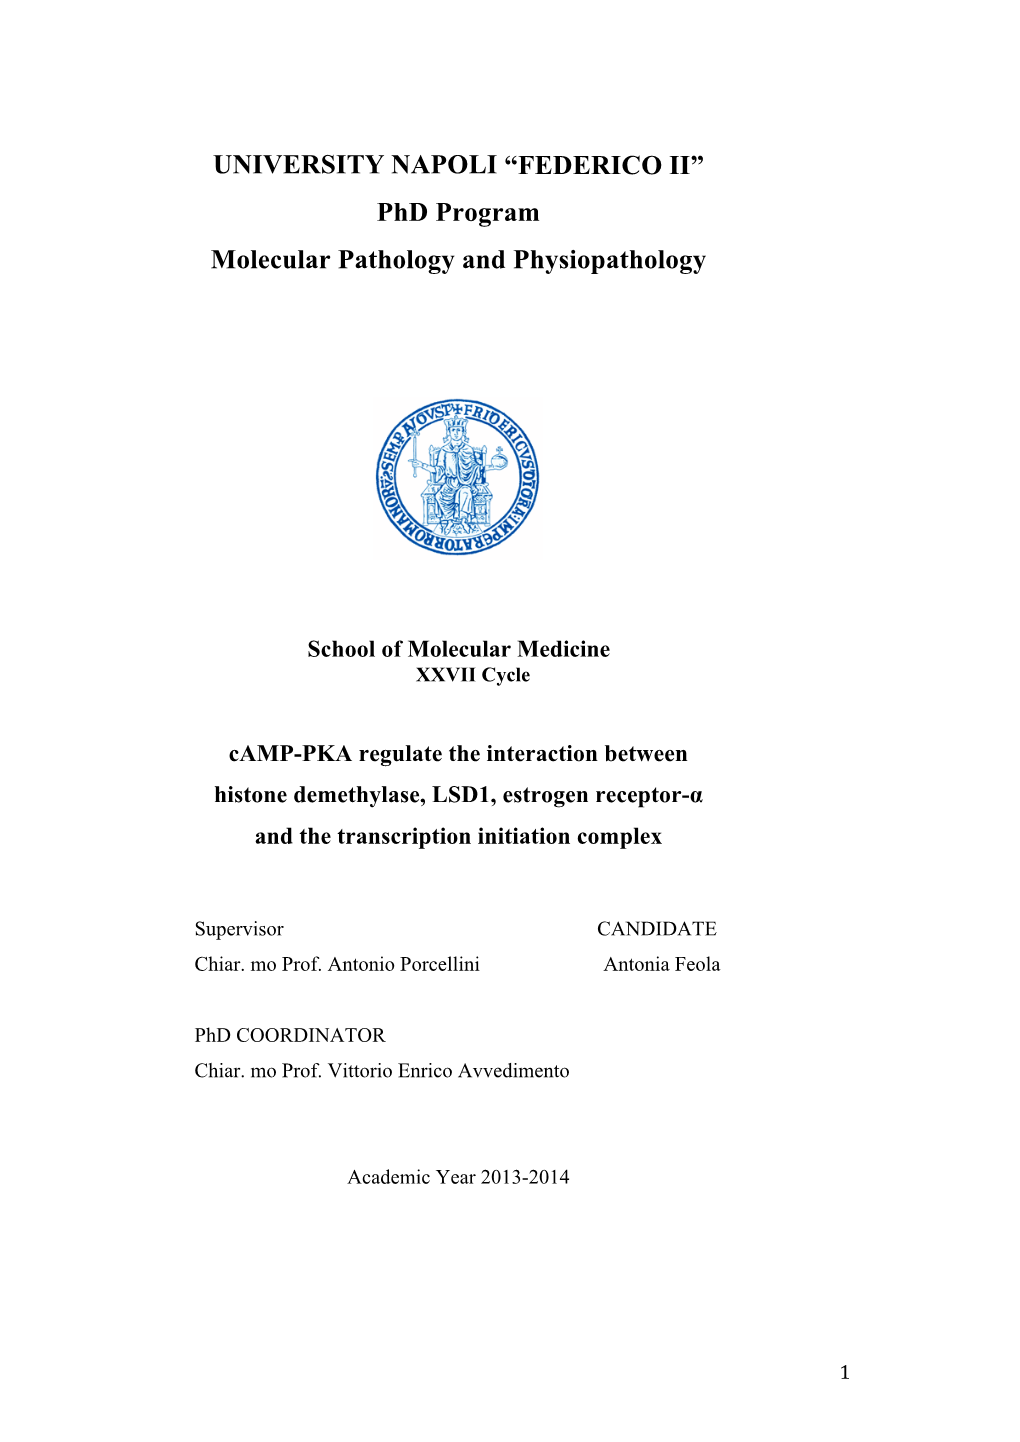 Phd Program Molecular Pathology and Physiopathology